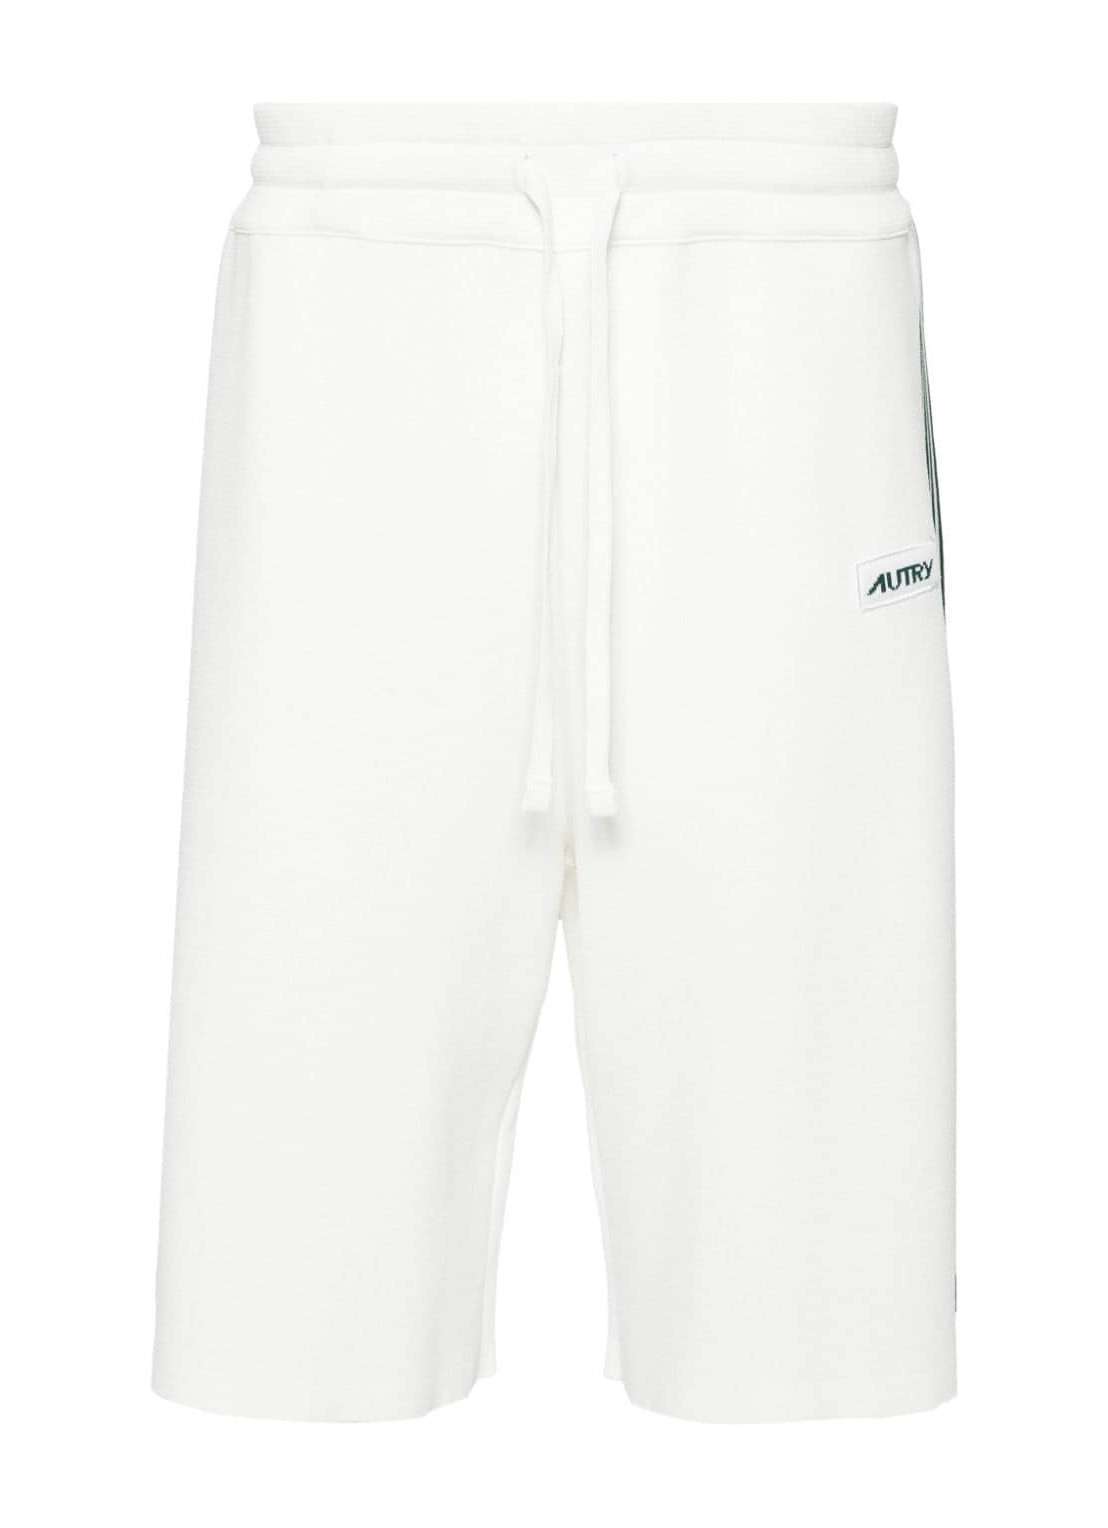 Pantalon corto autry short pant man shorts main man shpm530w 530w talla blanco
 